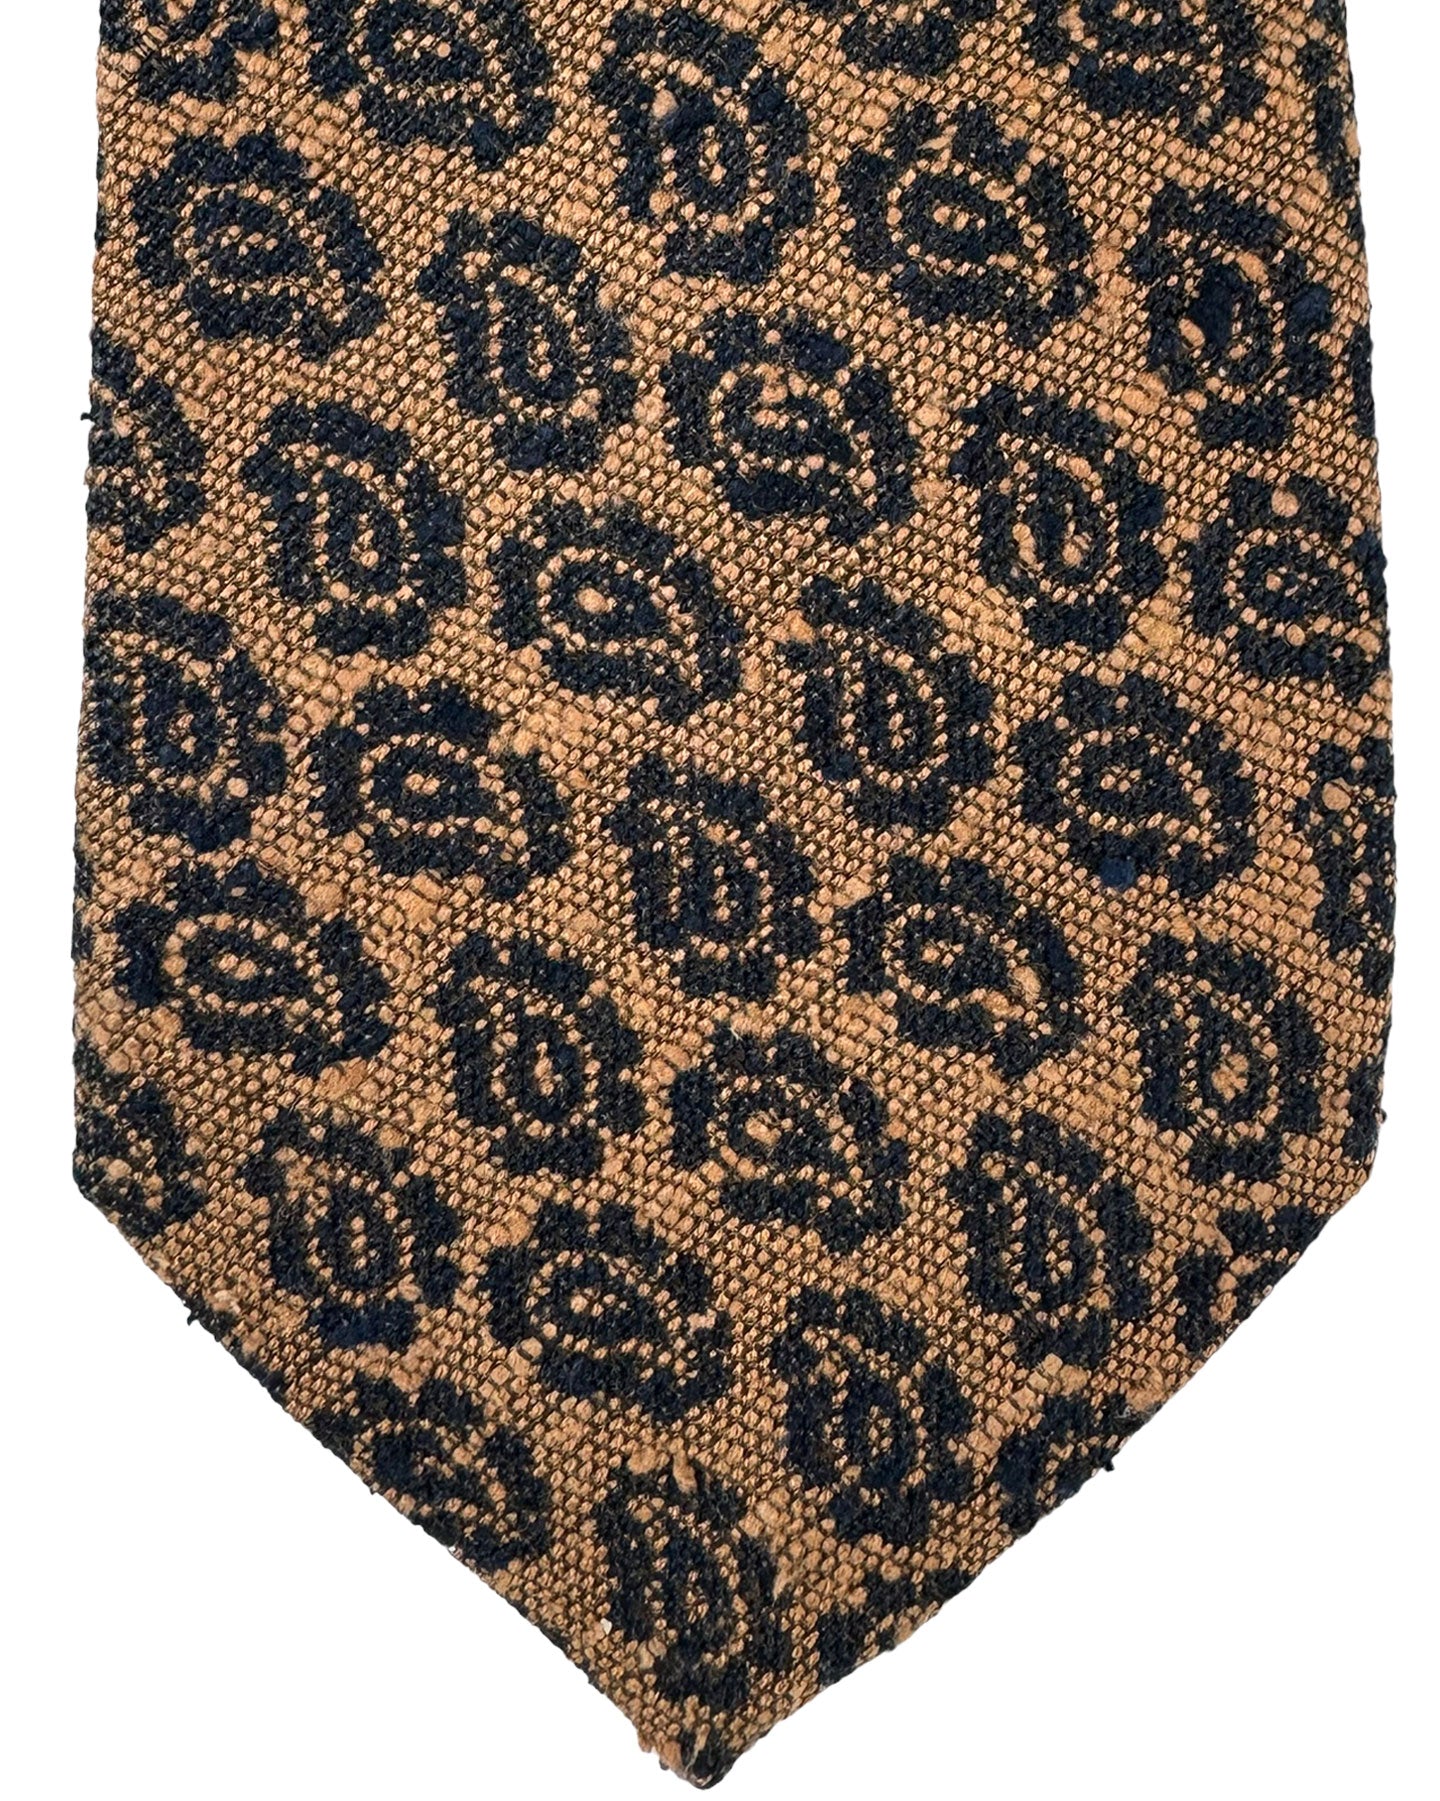 Kiton Silk Tie Brown Black Paisley Design - Sevenfold Necktie